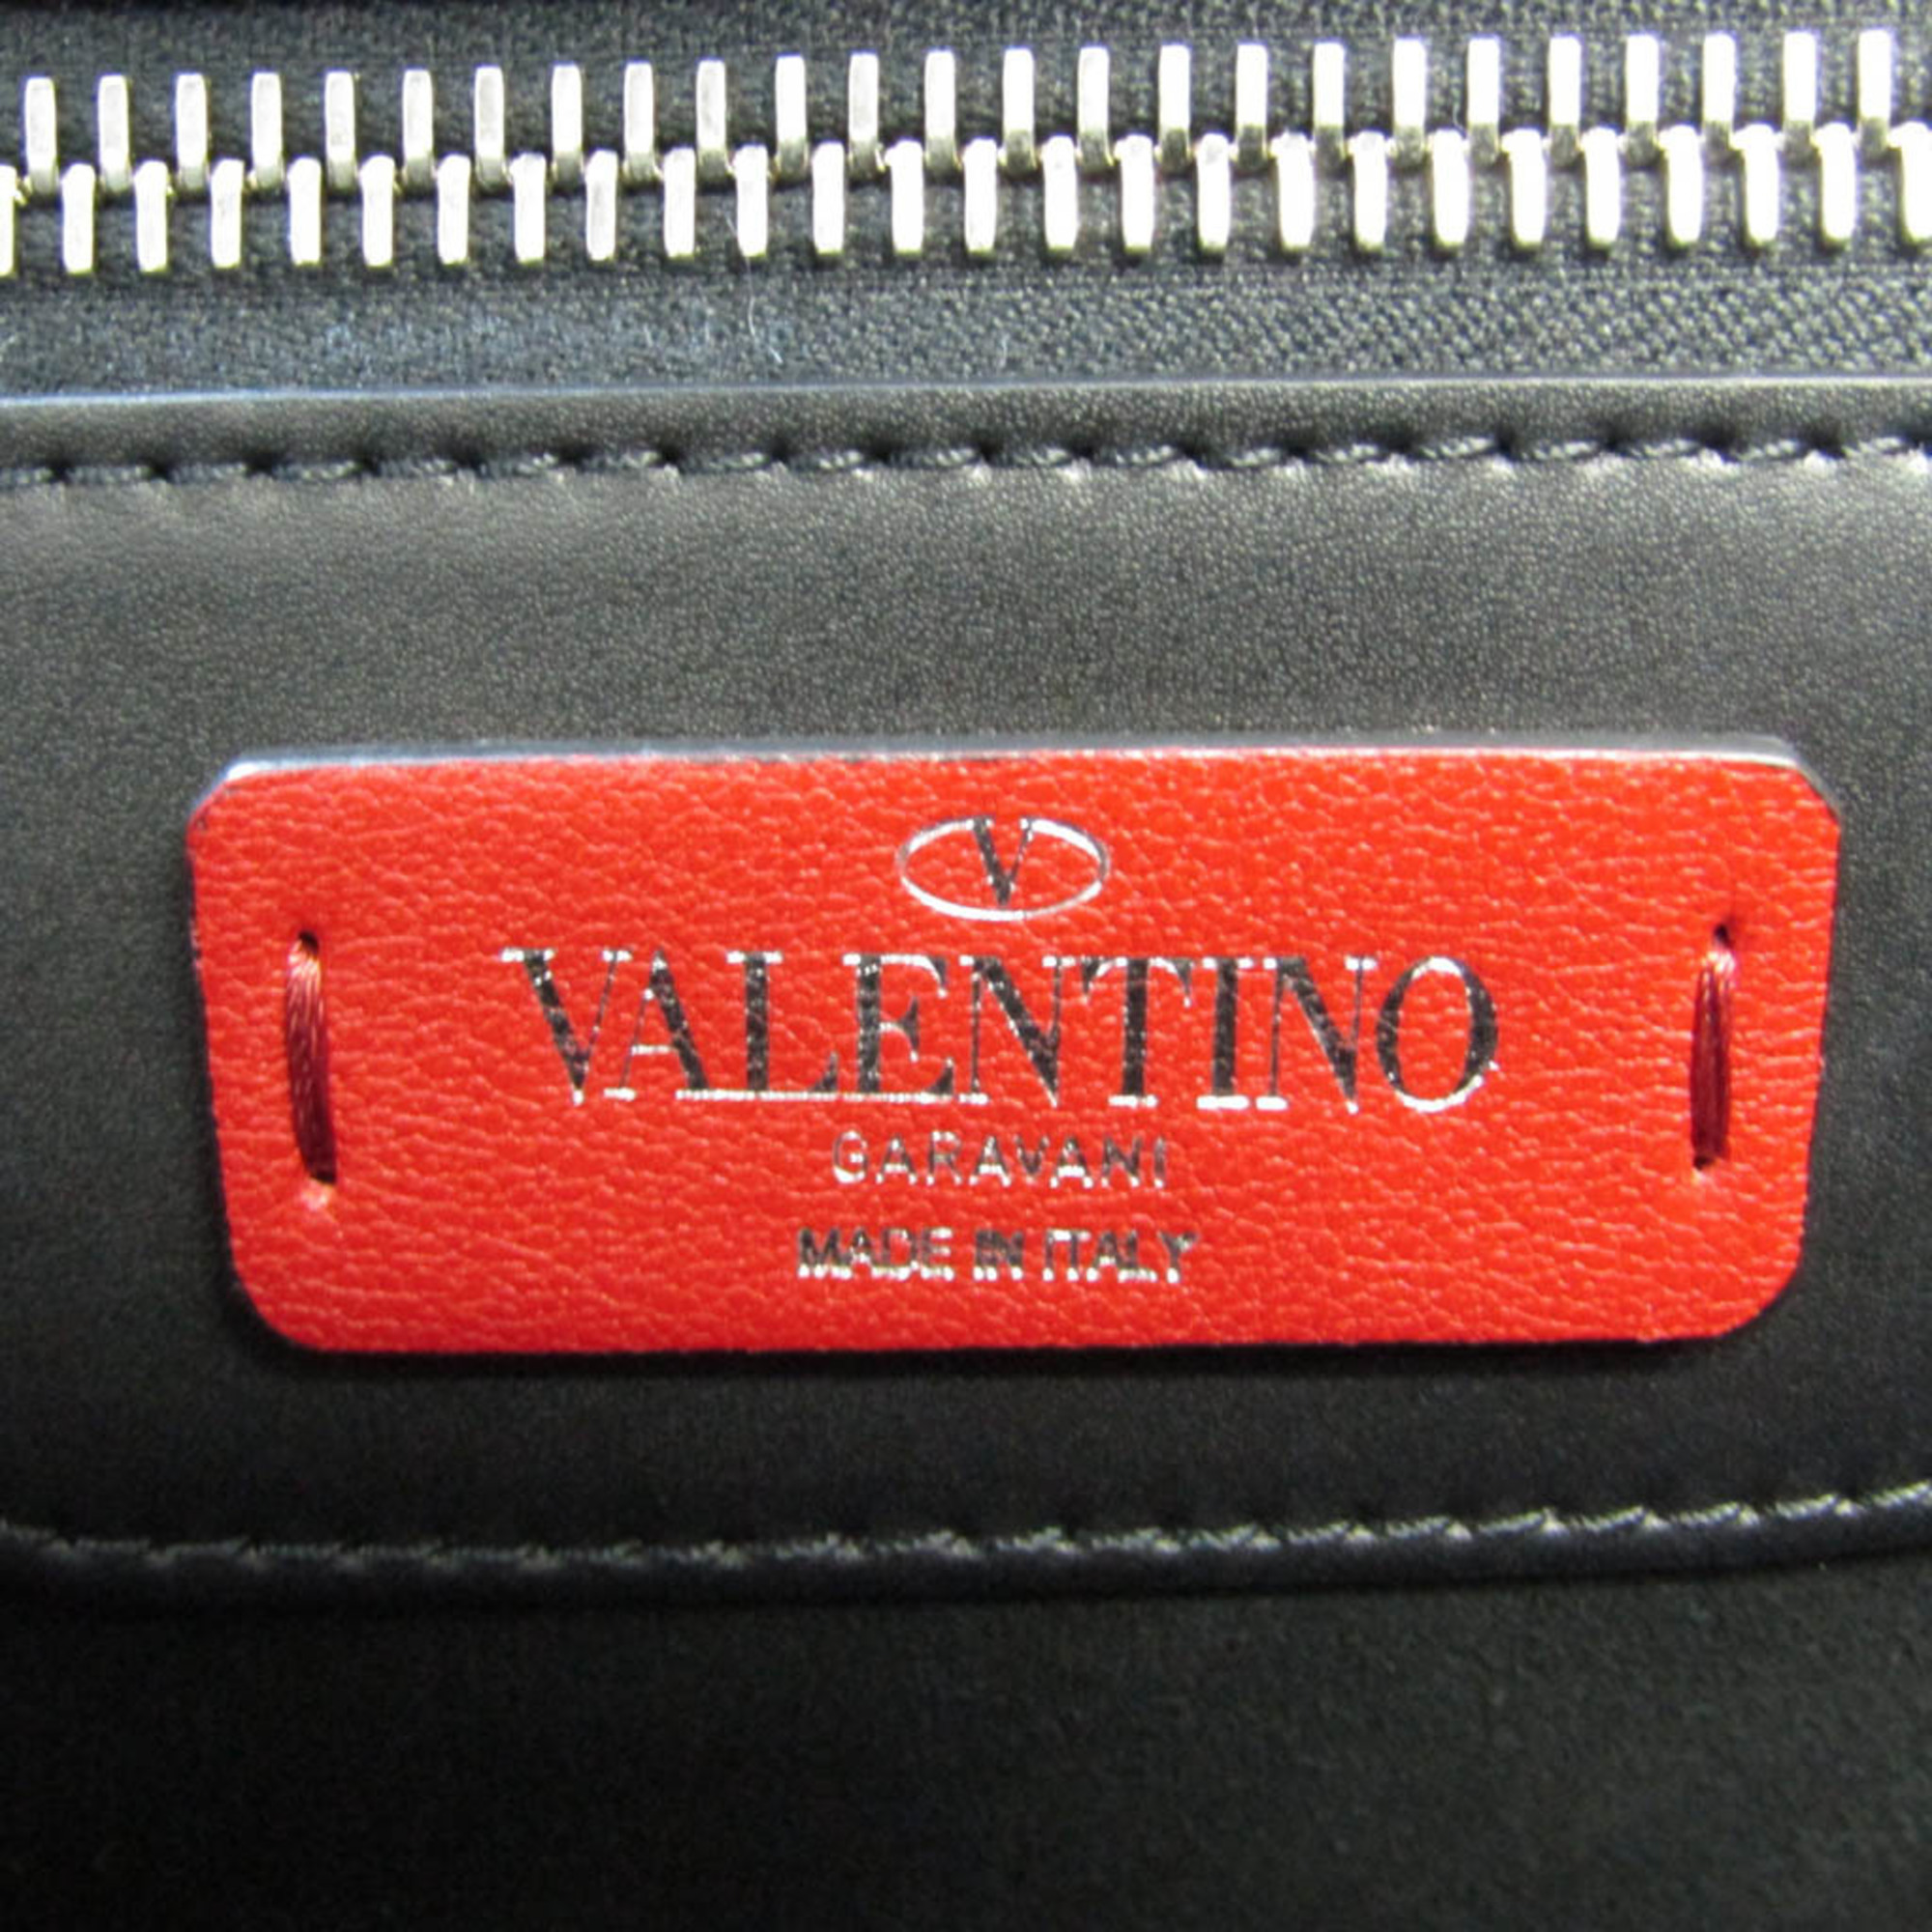 Valentino Garavani B0944 WJW Women,Men Leather Backpack Black